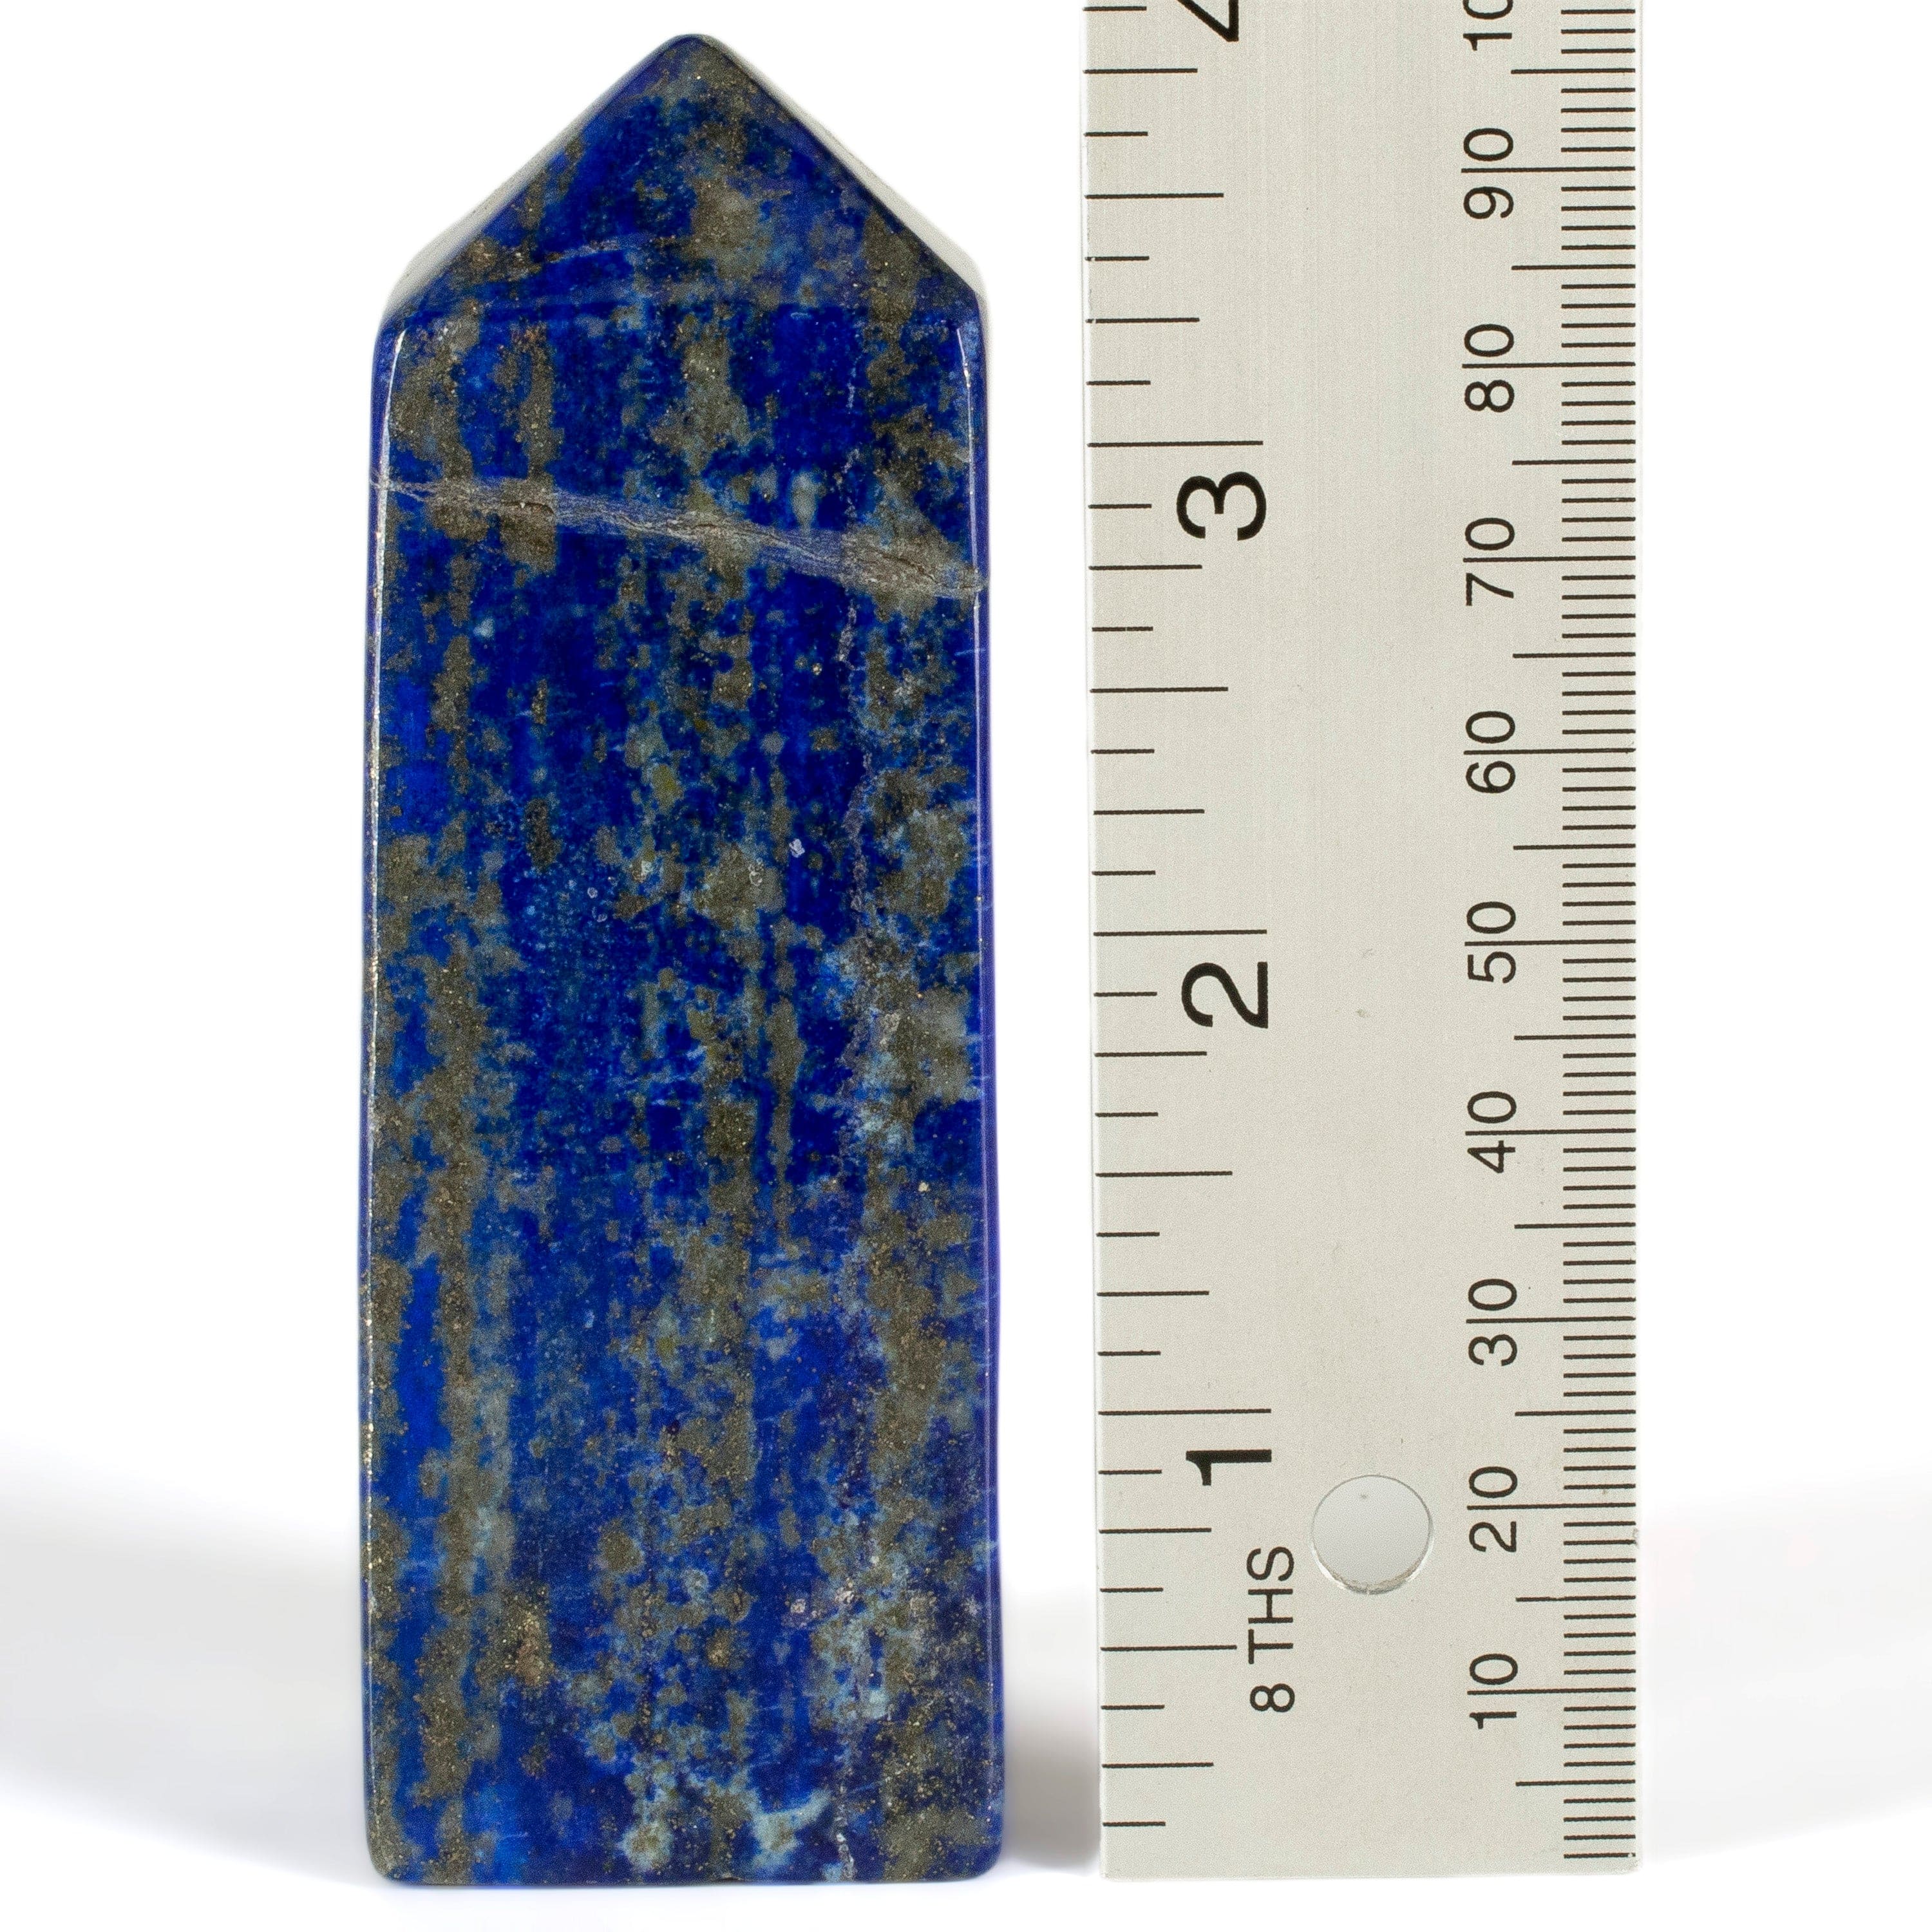 Kalifano Lapis Lapis Lazuli Polished Obelisk from Afghanistan - 4" / 310 grams LPOB650.001